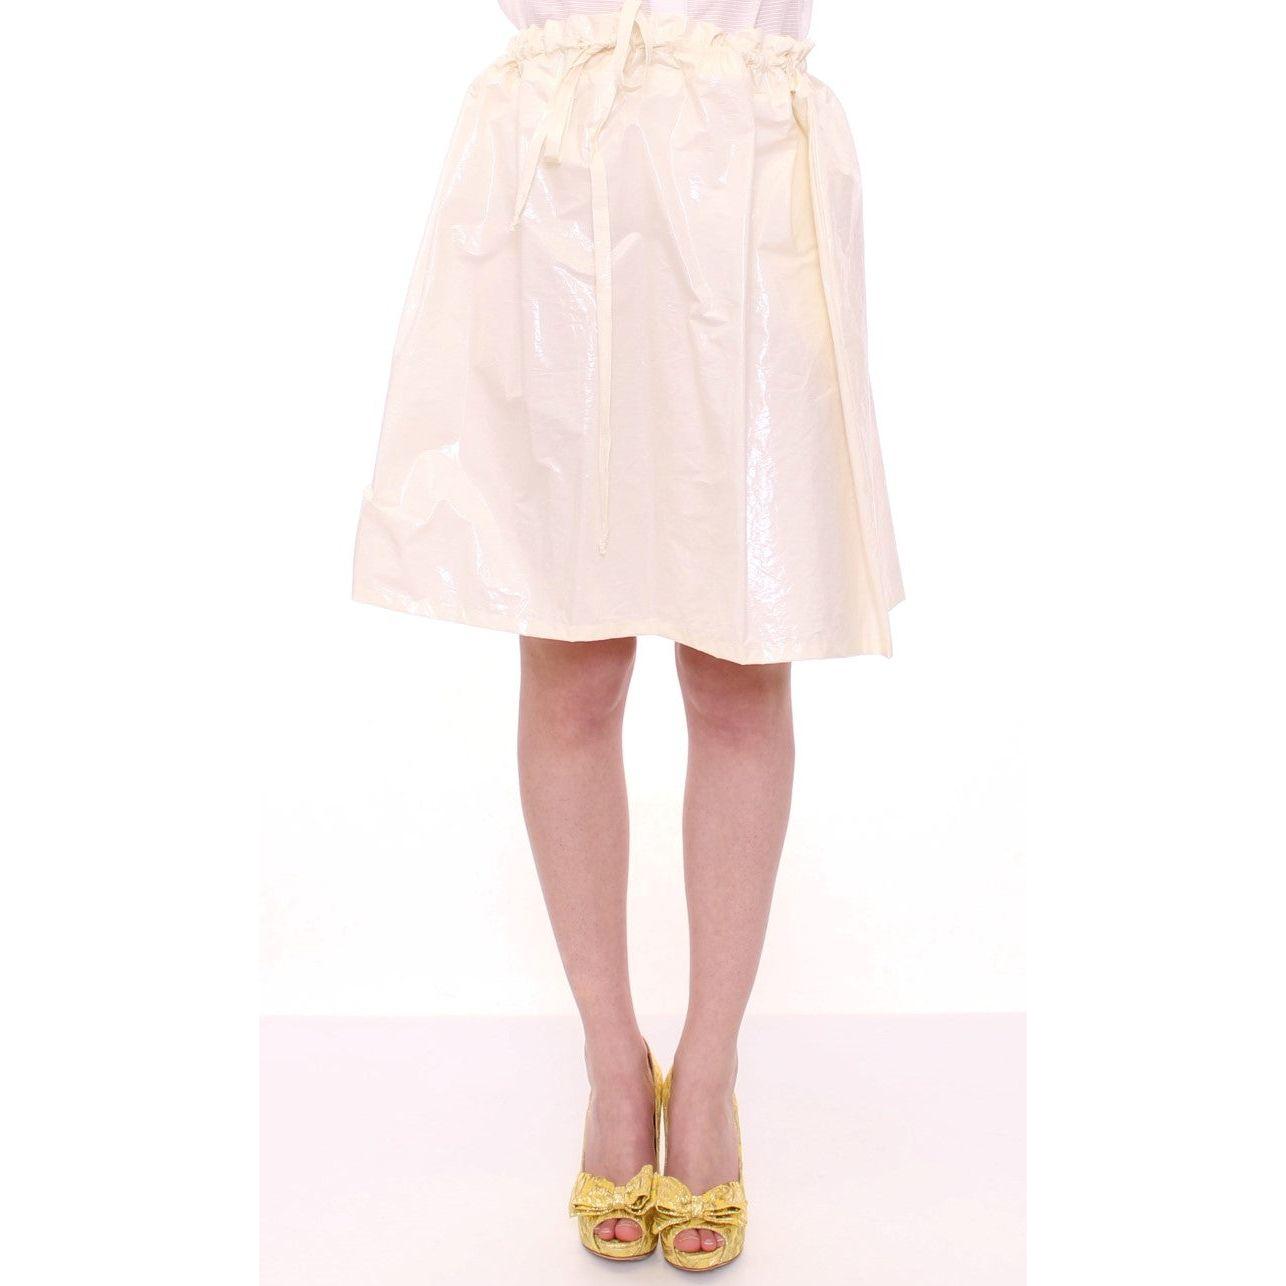 Licia Florio | White Above-Knee Stretch Waist Strap Skirt | McRichard Designer Brands